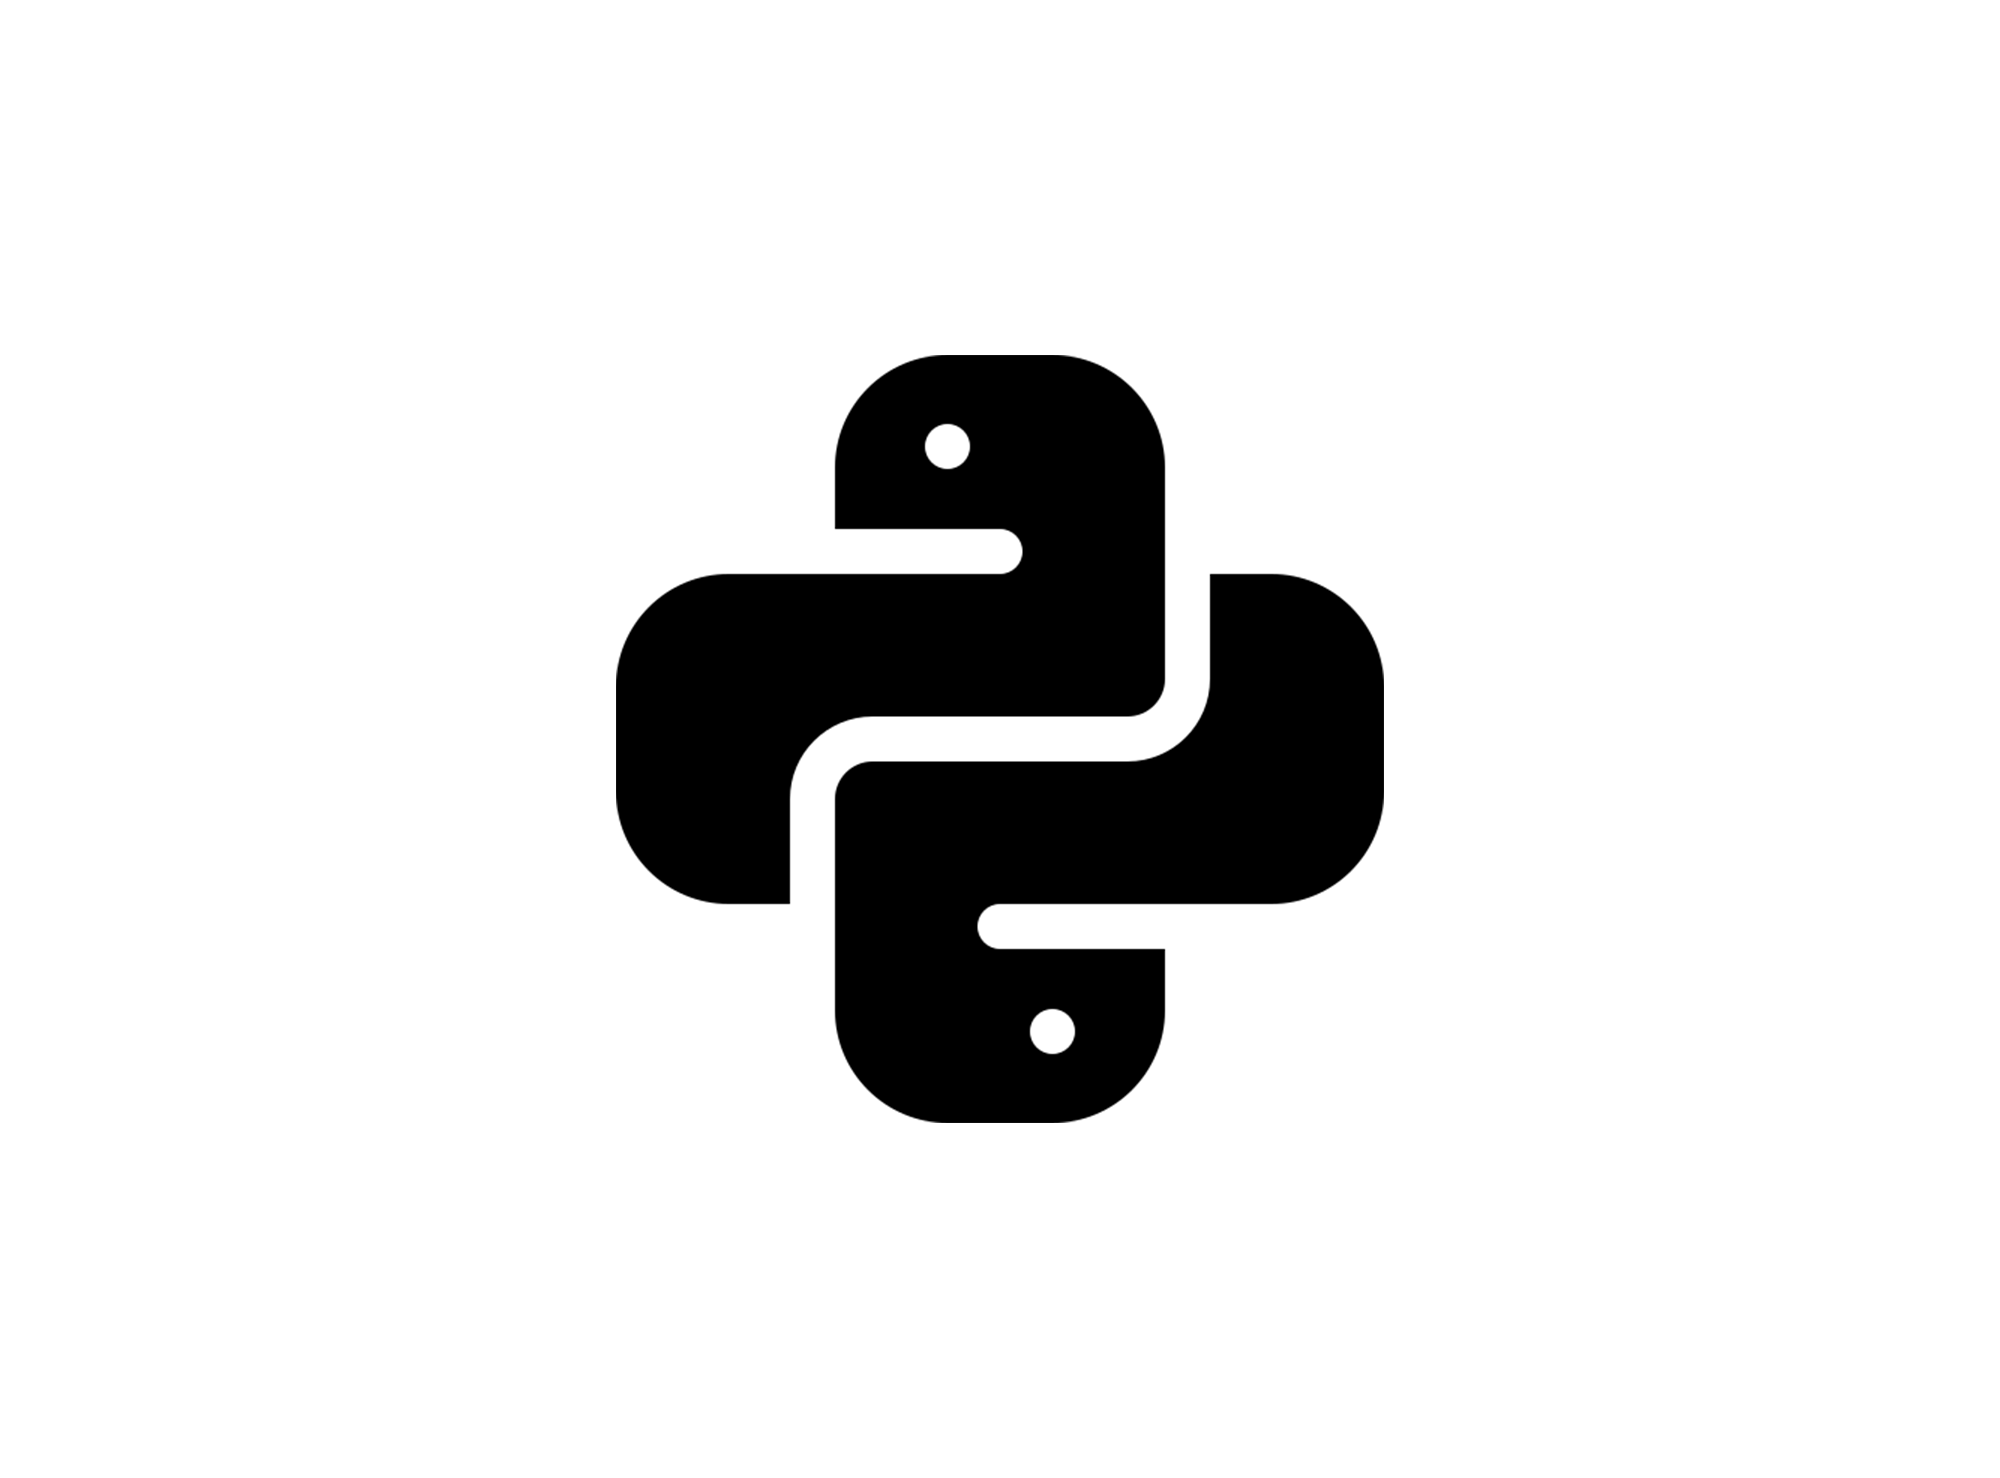 Django logo